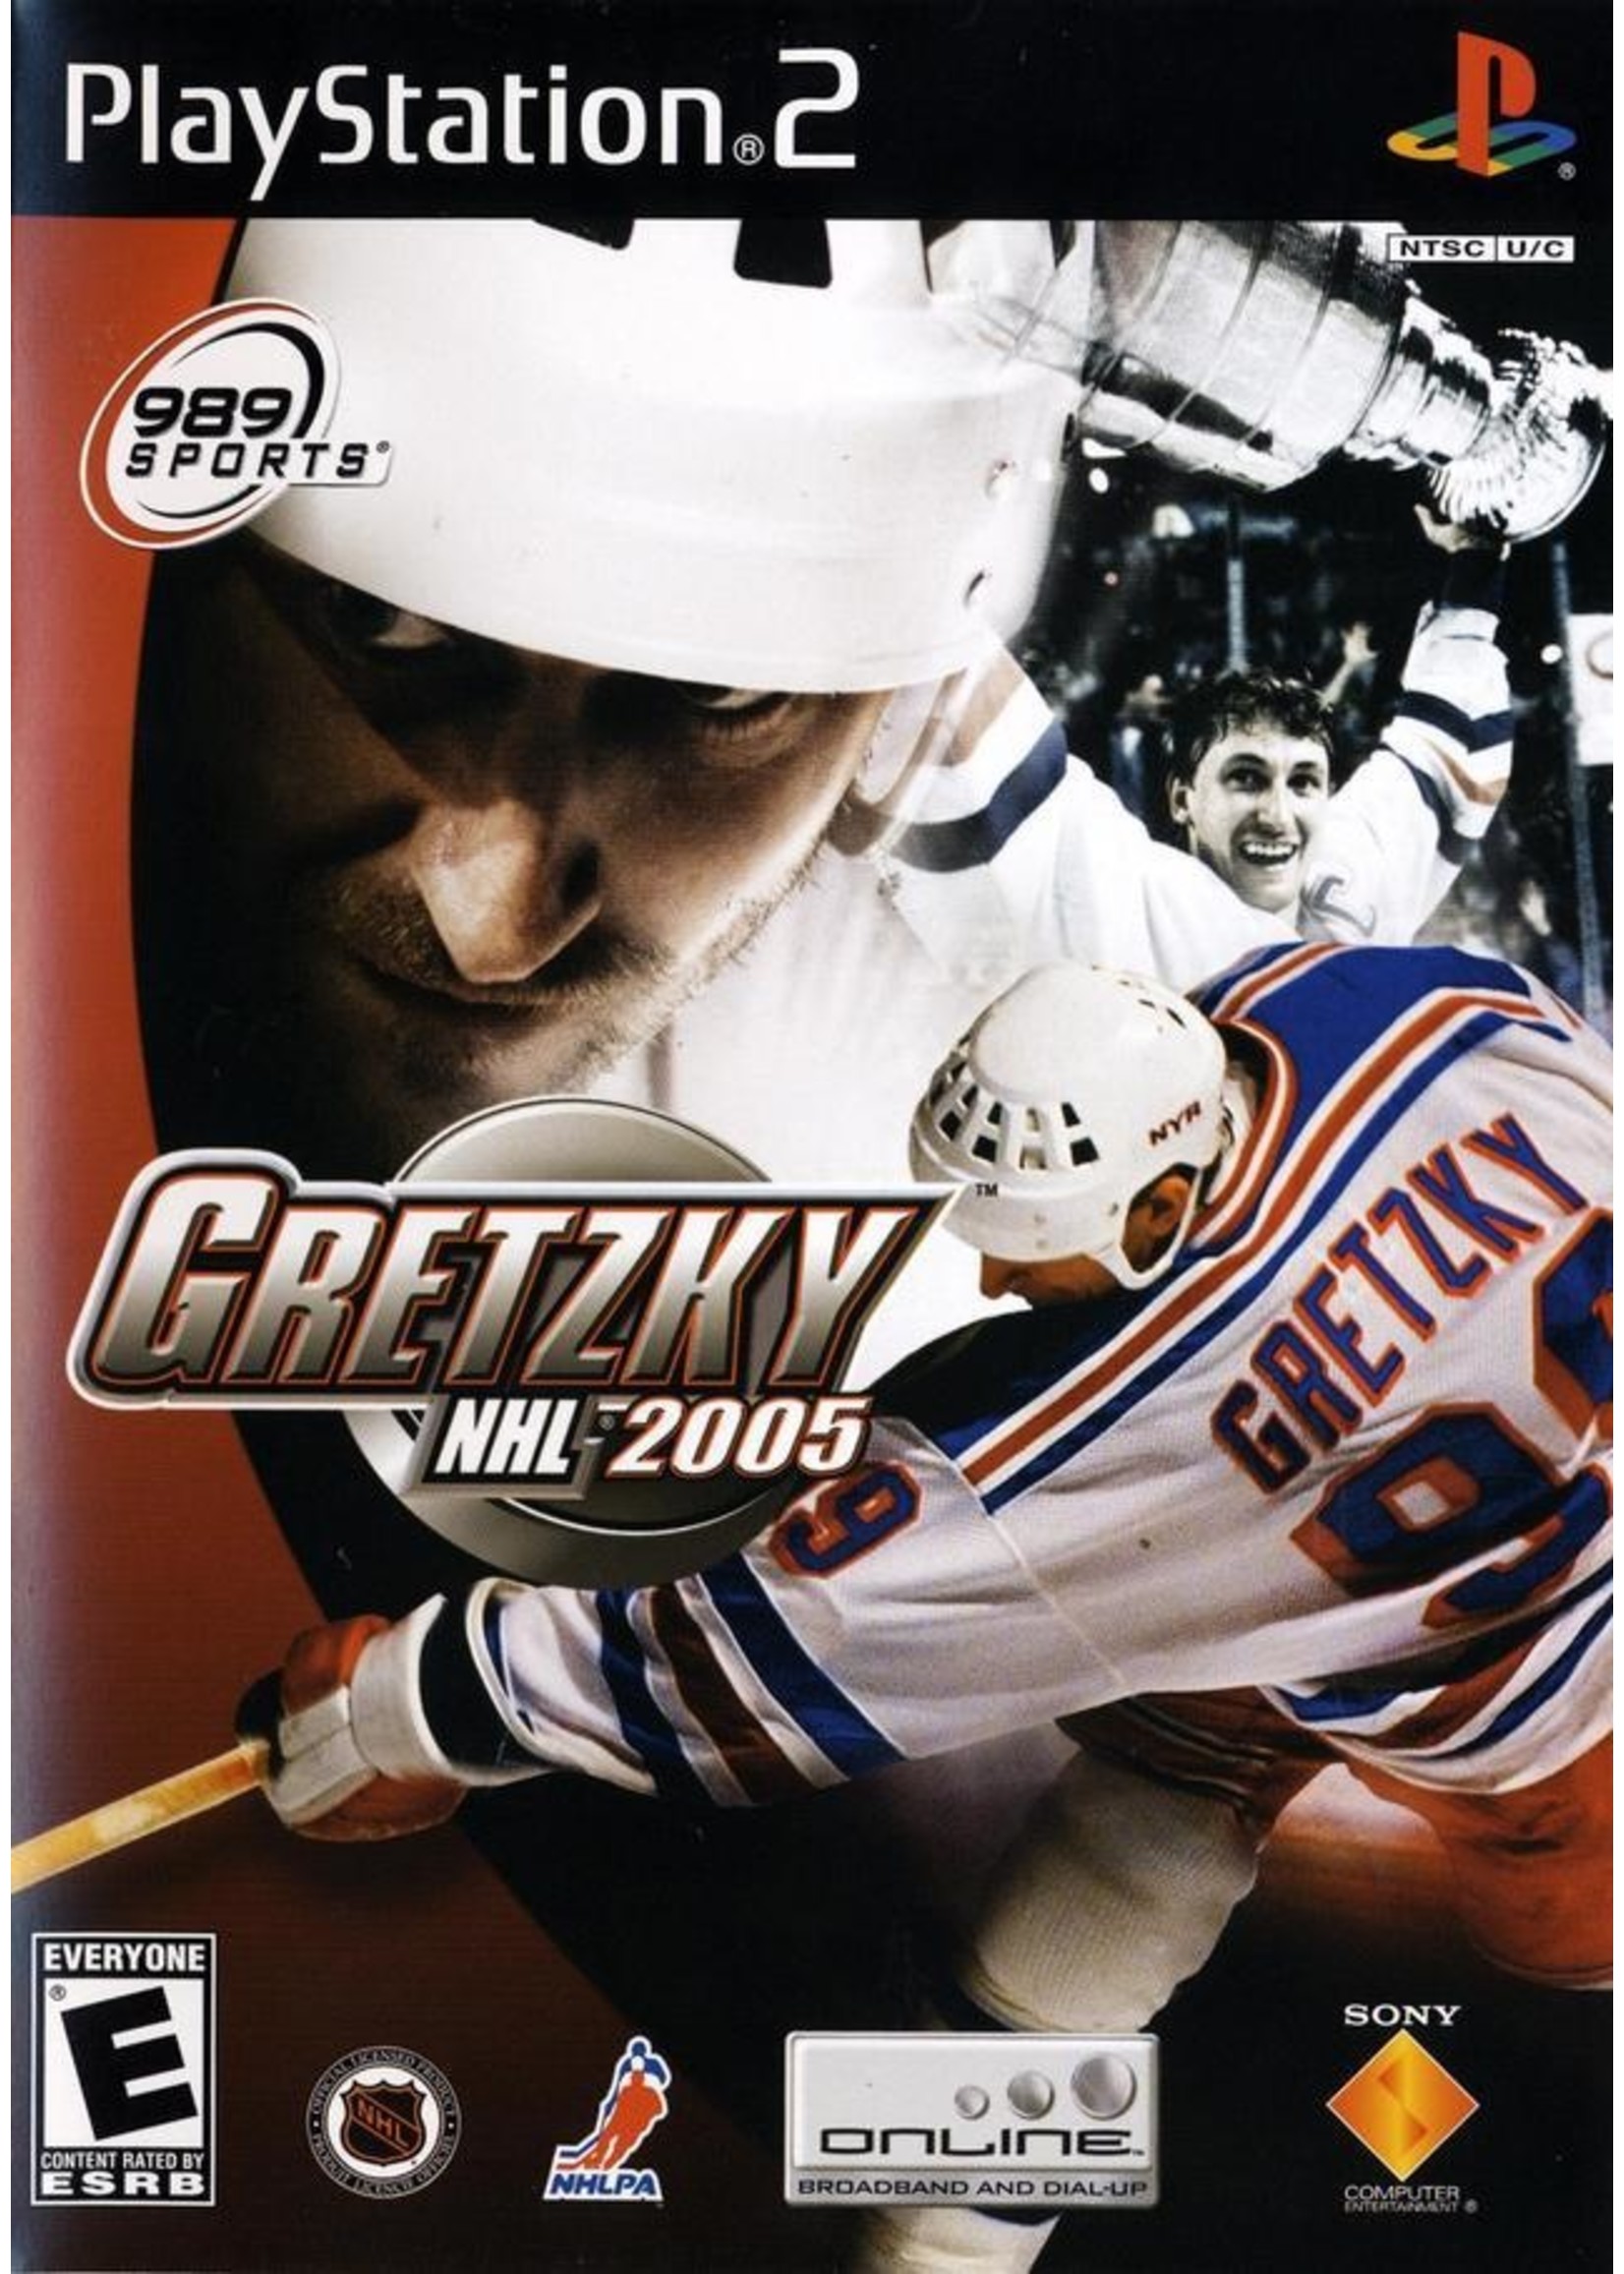 Sony Playstation 2 (PS2) Gretzky NHL 2005